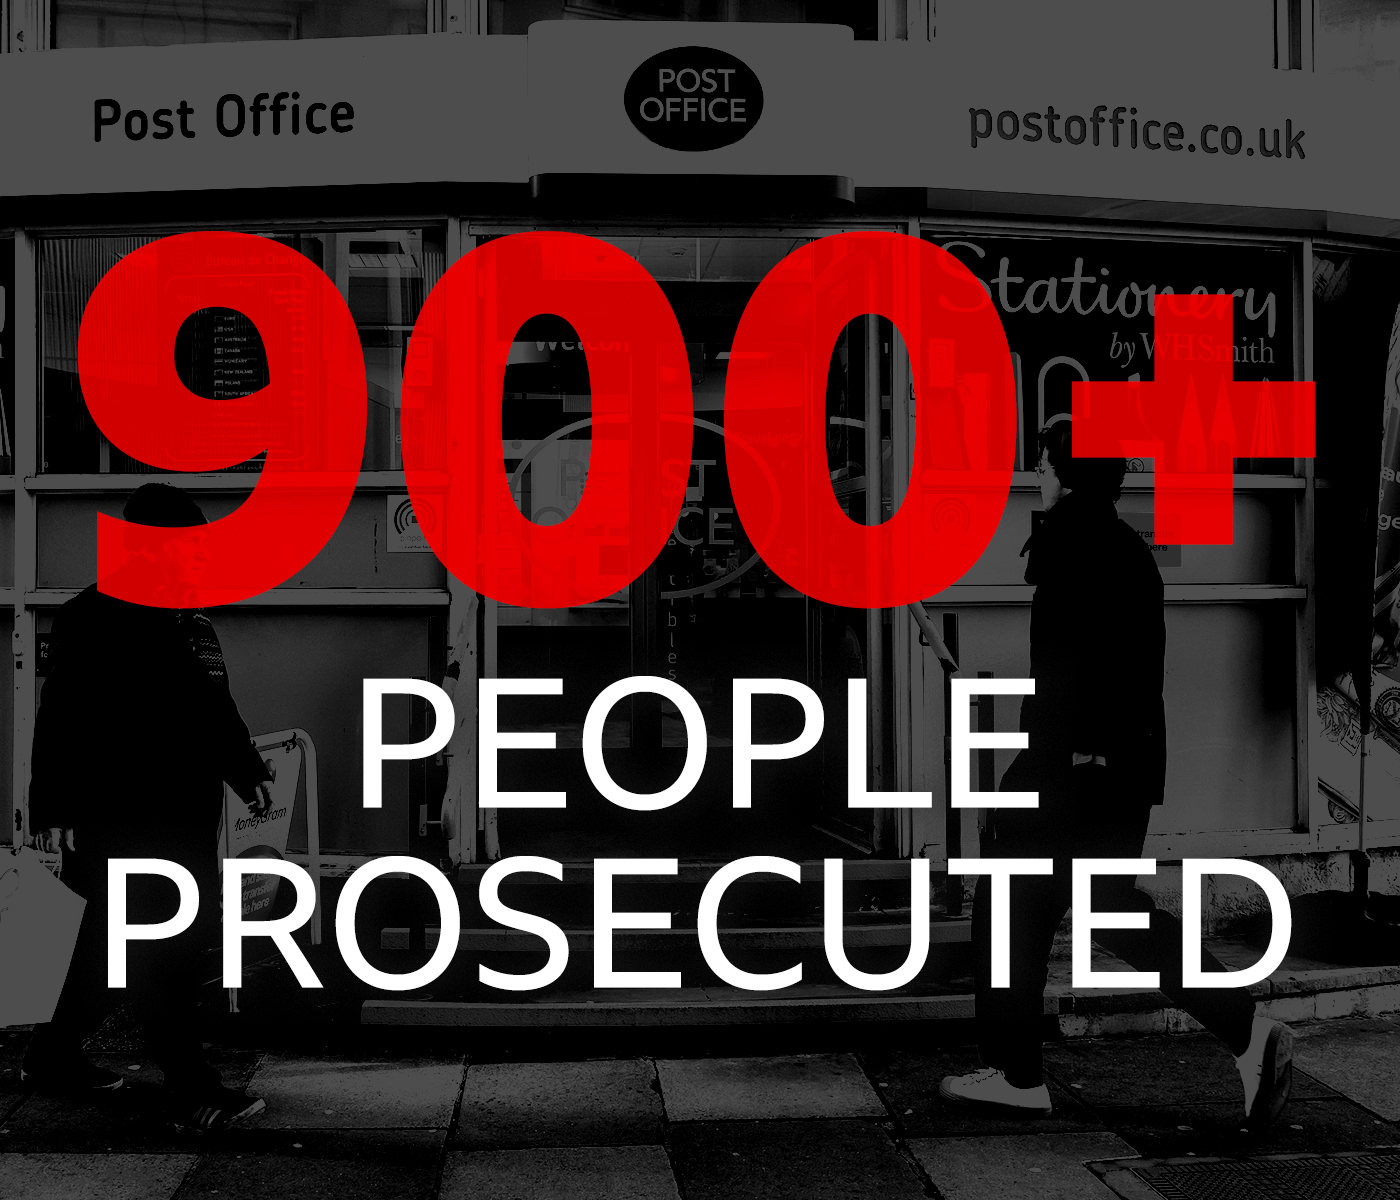 900+ people prosecuted